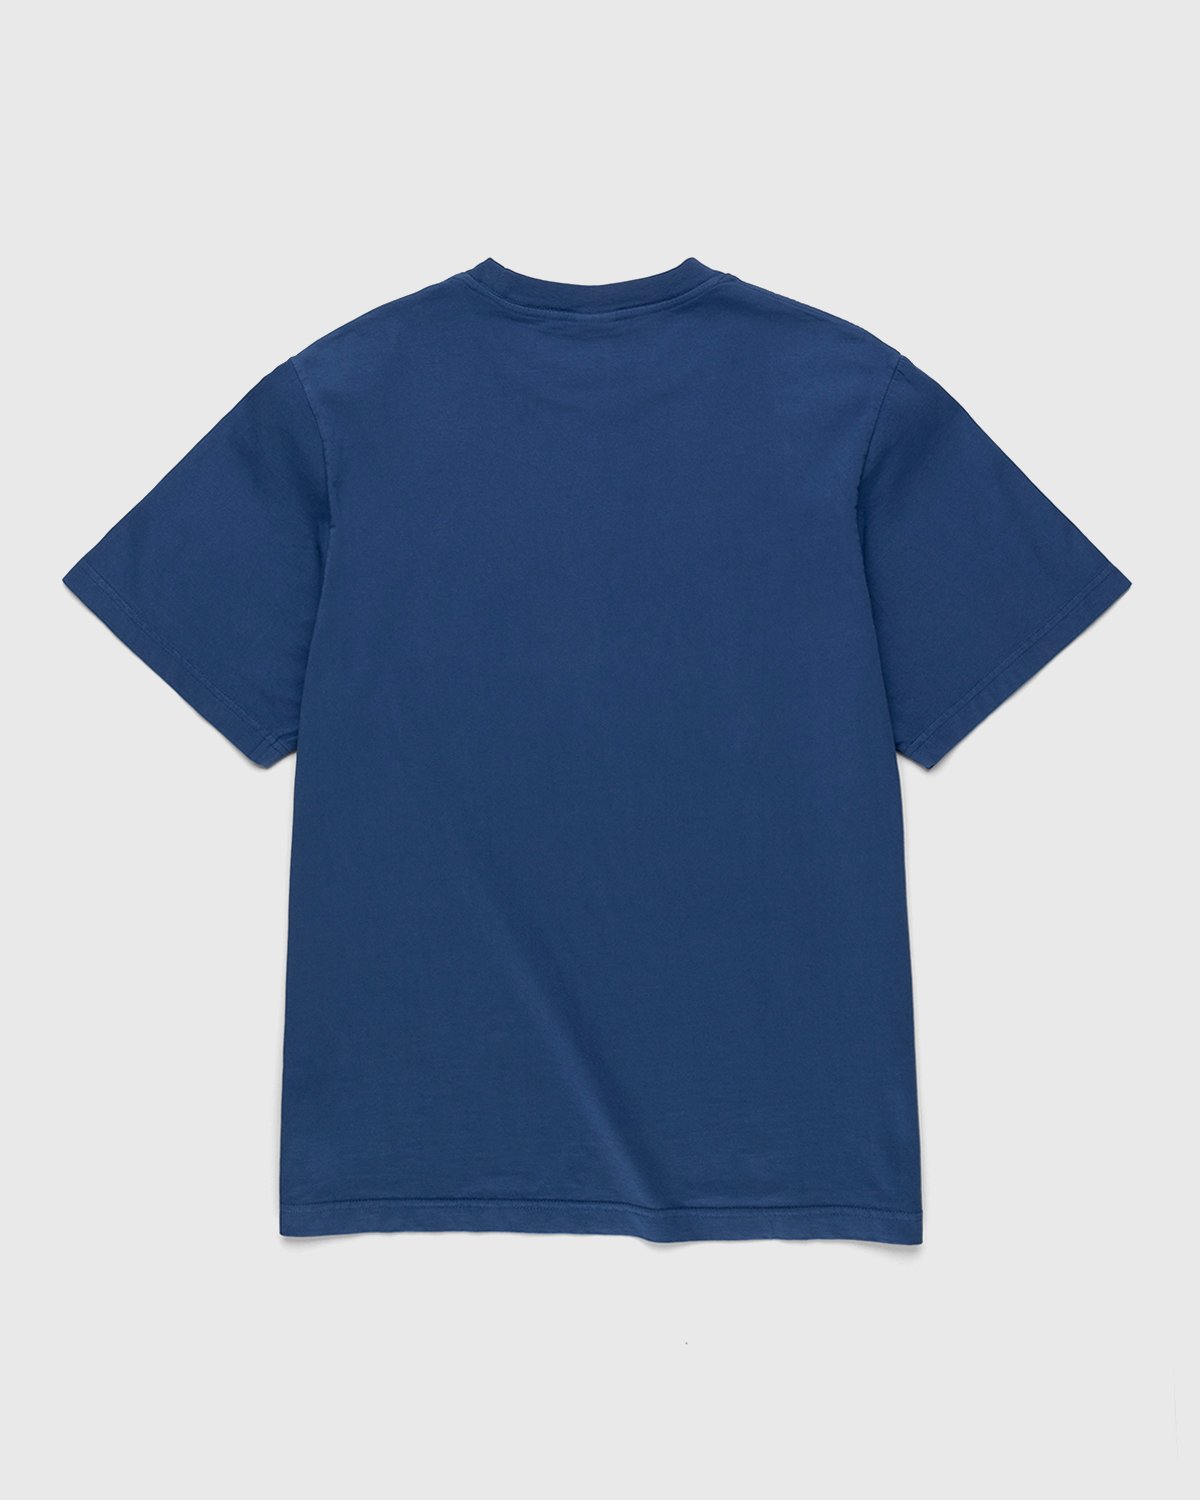 Noon Goons - My Block Tshirt Navy - Clothing - Blue - Image 2